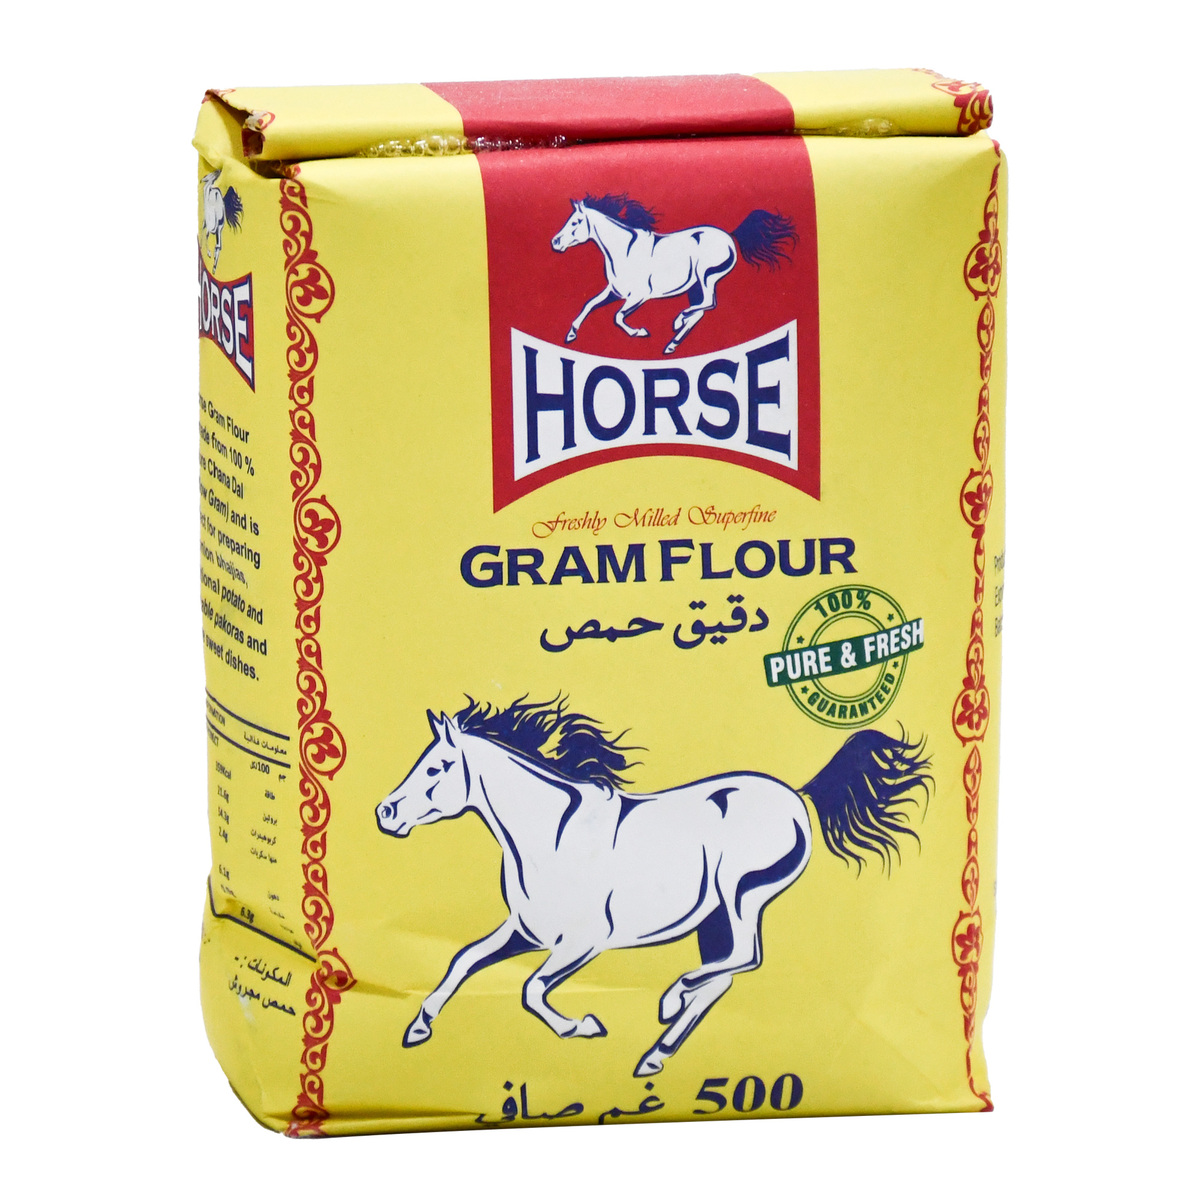 Horse Gram Flour 500 g